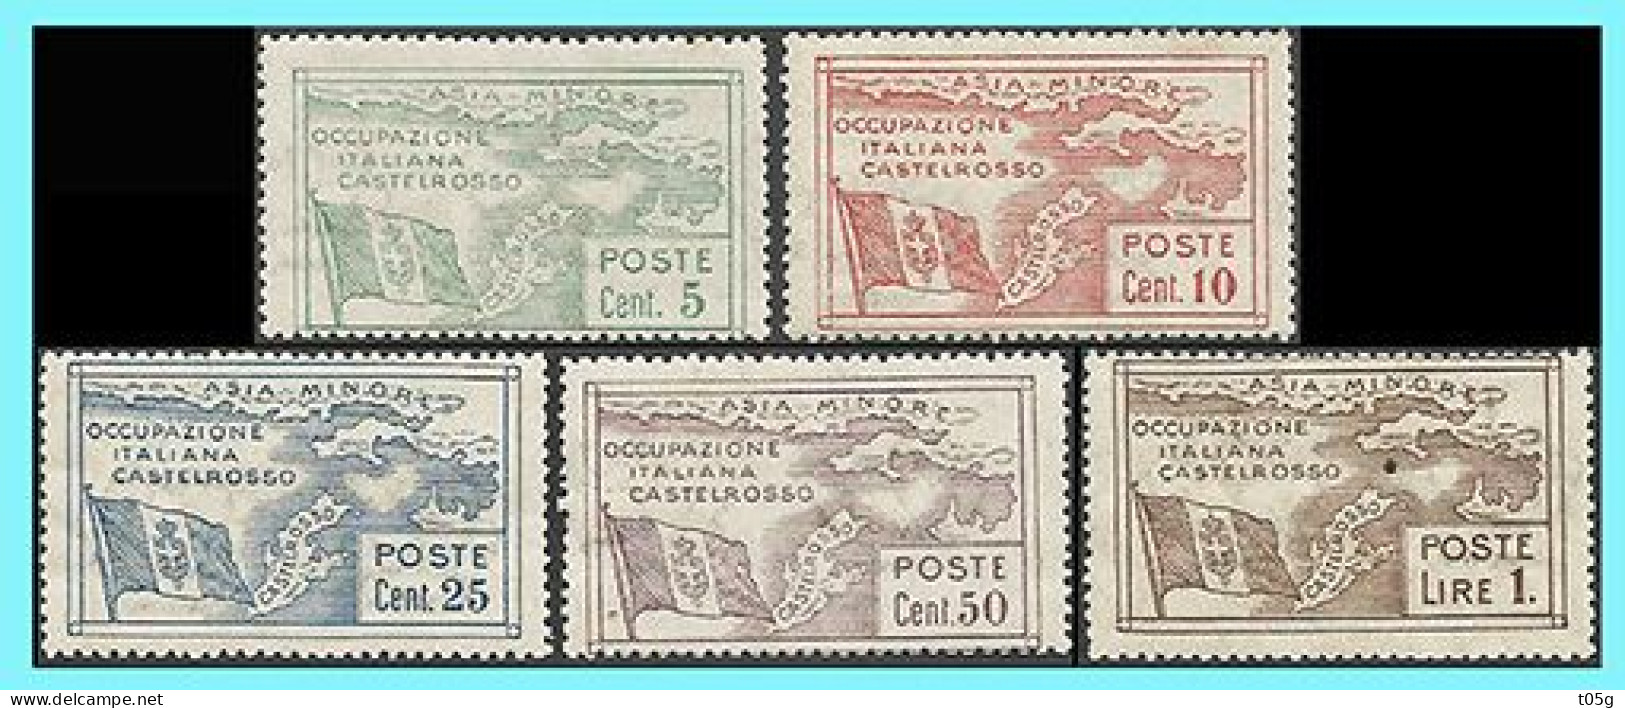 CASTELLORIZO- GREECE- GRECE - HELLAS- ITALY 1923: Italian Post Office Compl. Set MNH** - Dodecanese